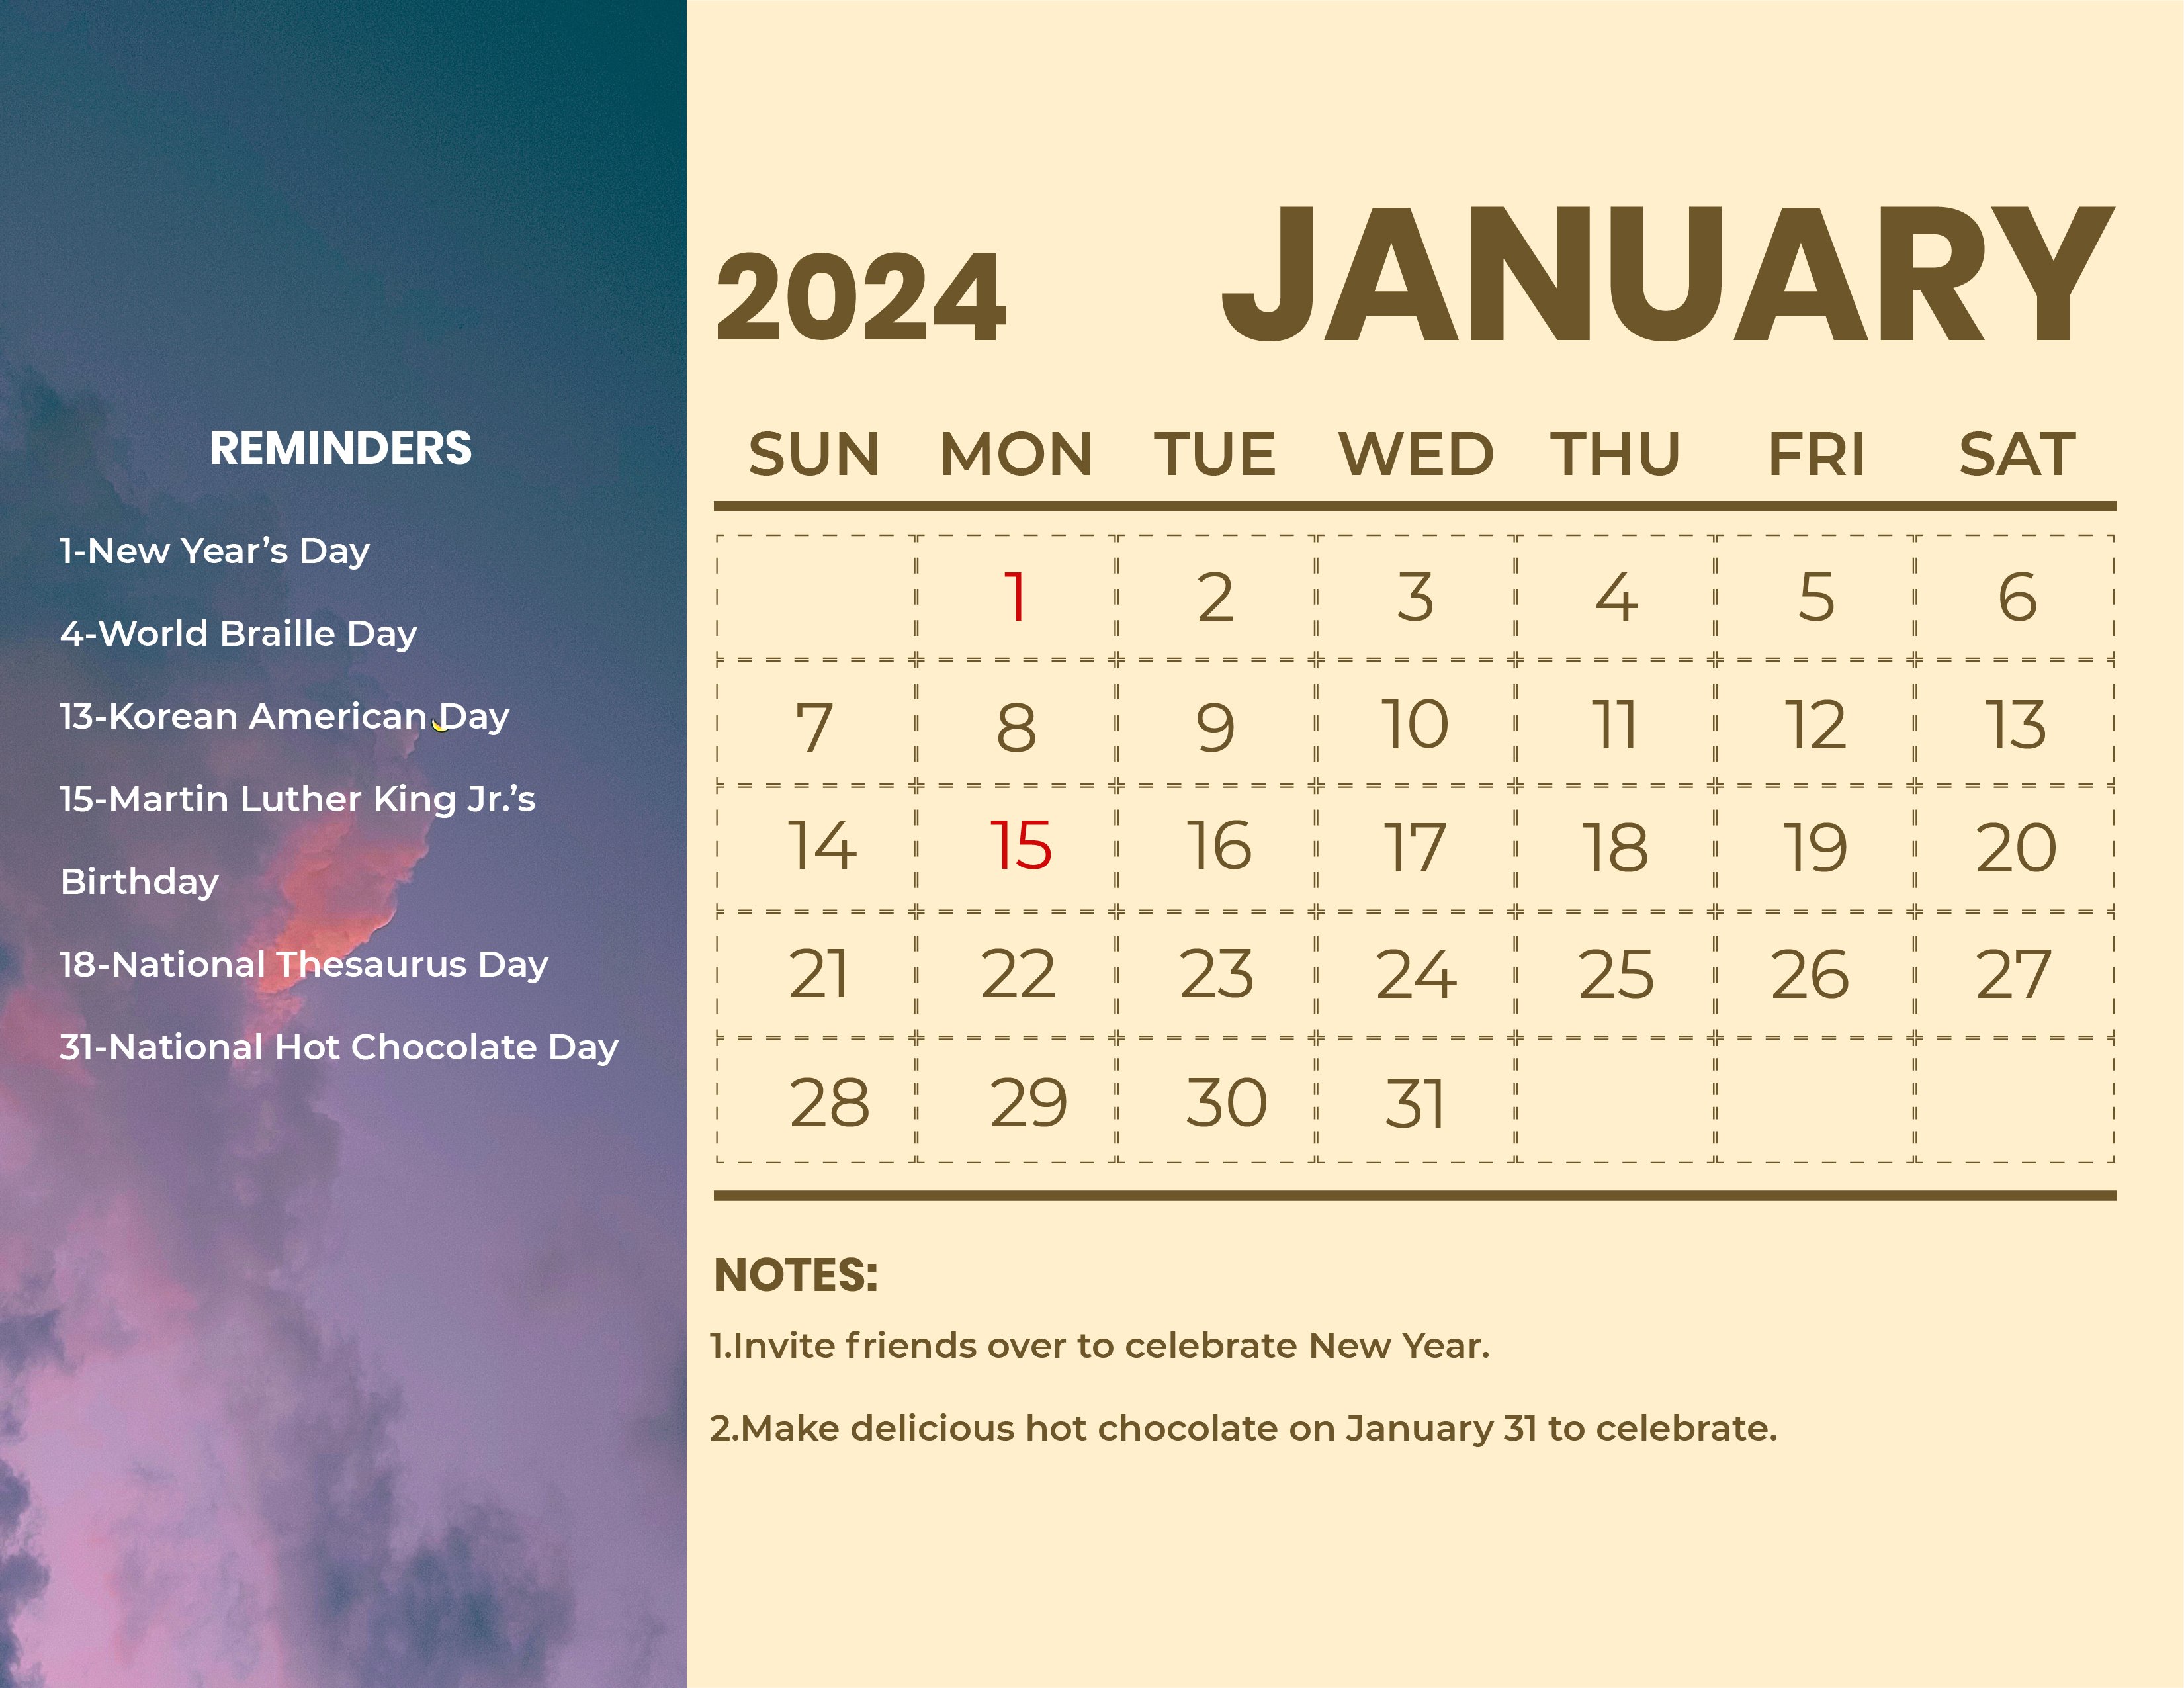 January 2024 Calendar With Holidays in Word, Illustrator, EPS, SVG, JPG